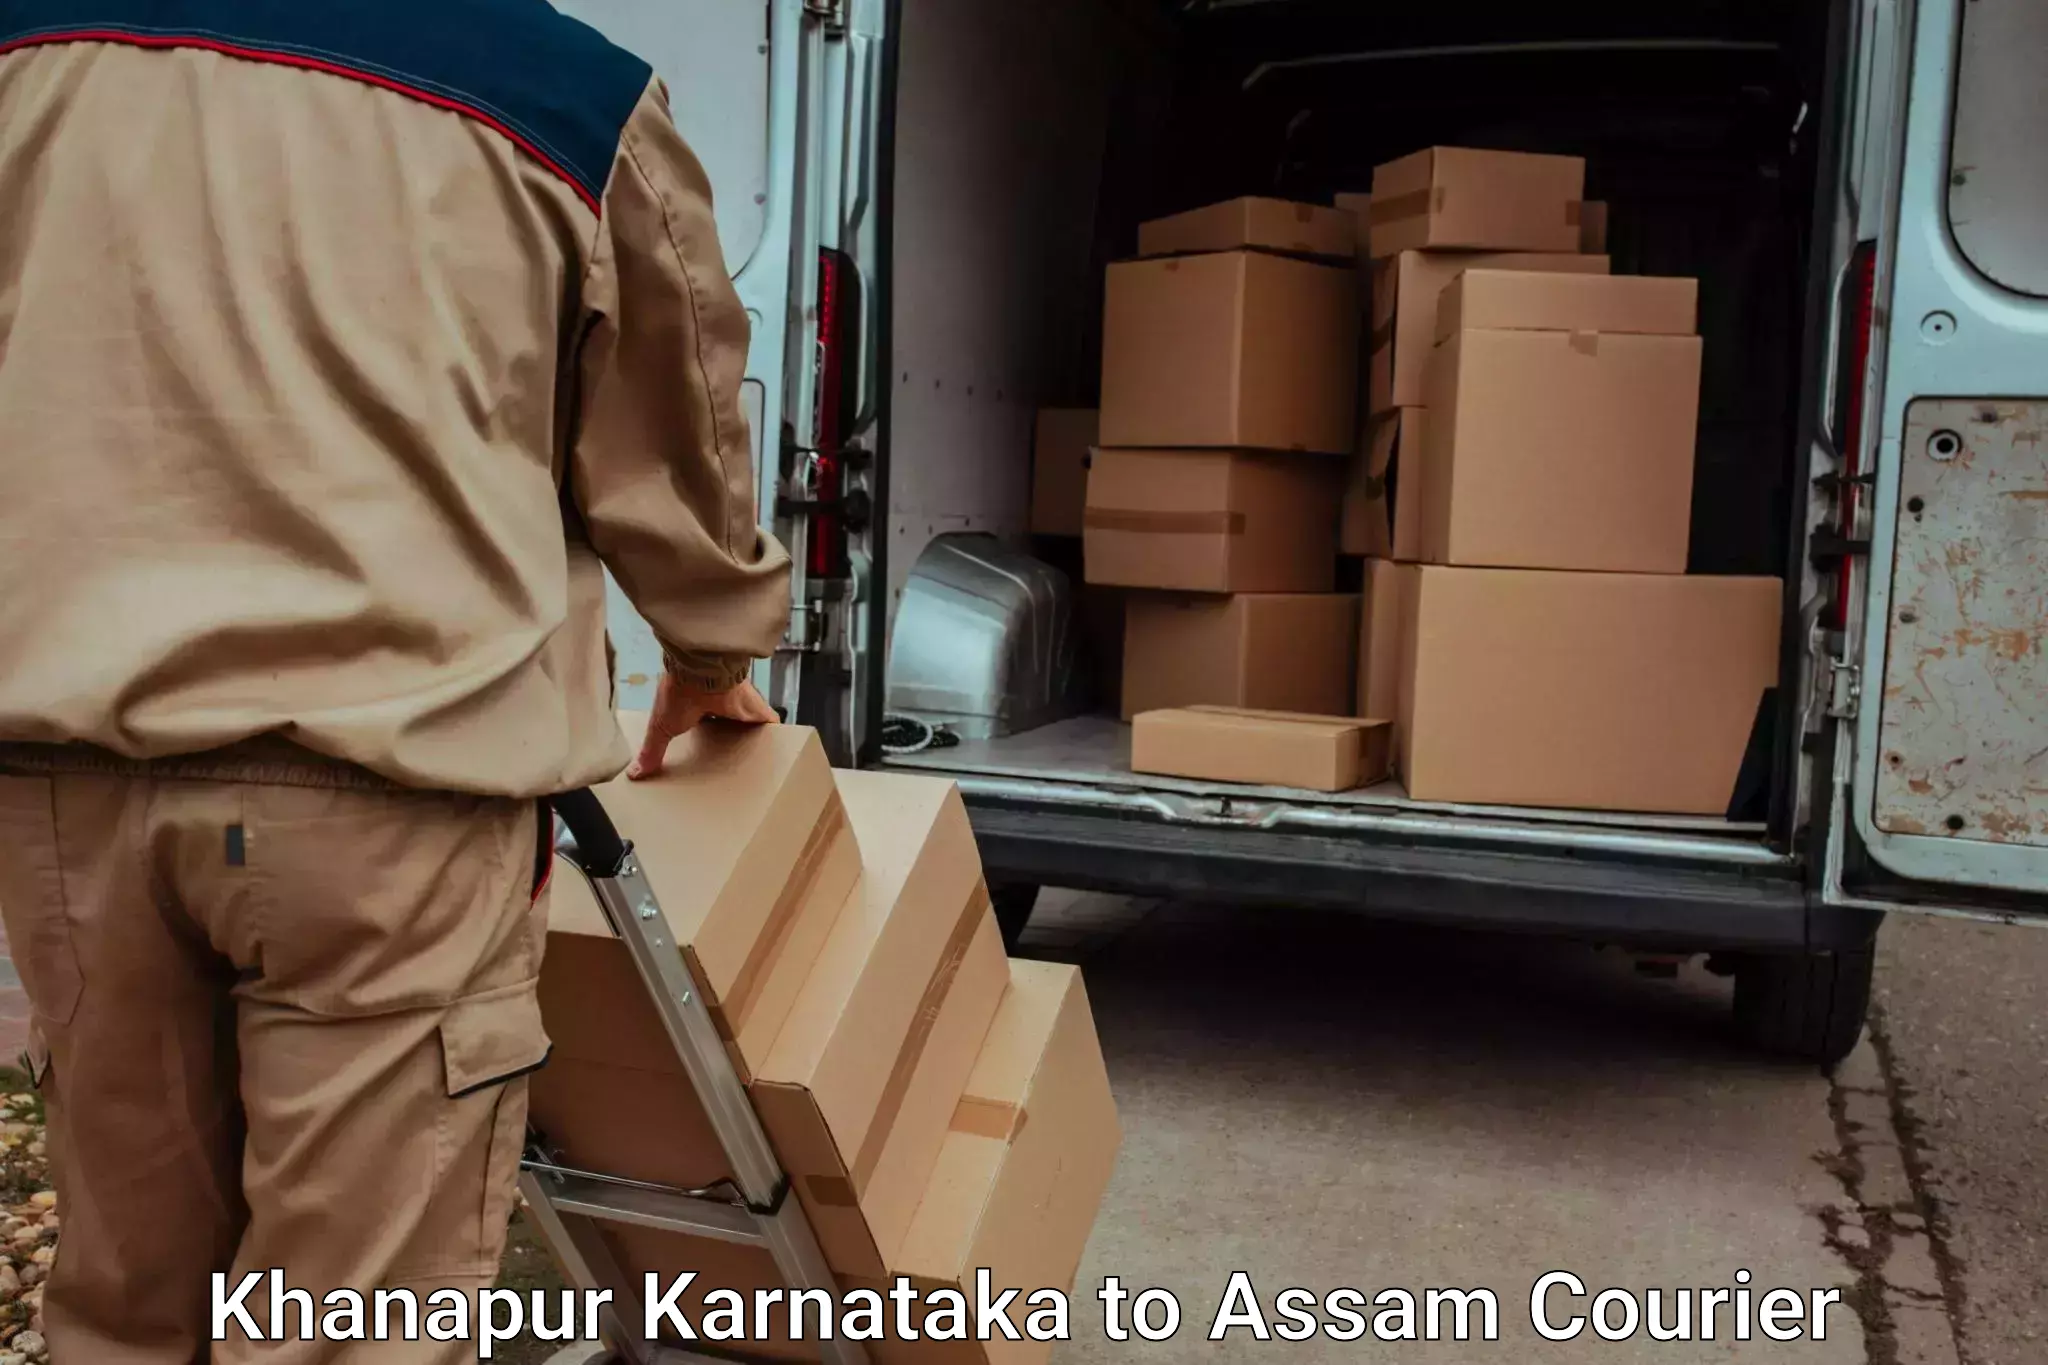 Luggage transport service Khanapur Karnataka to Assam